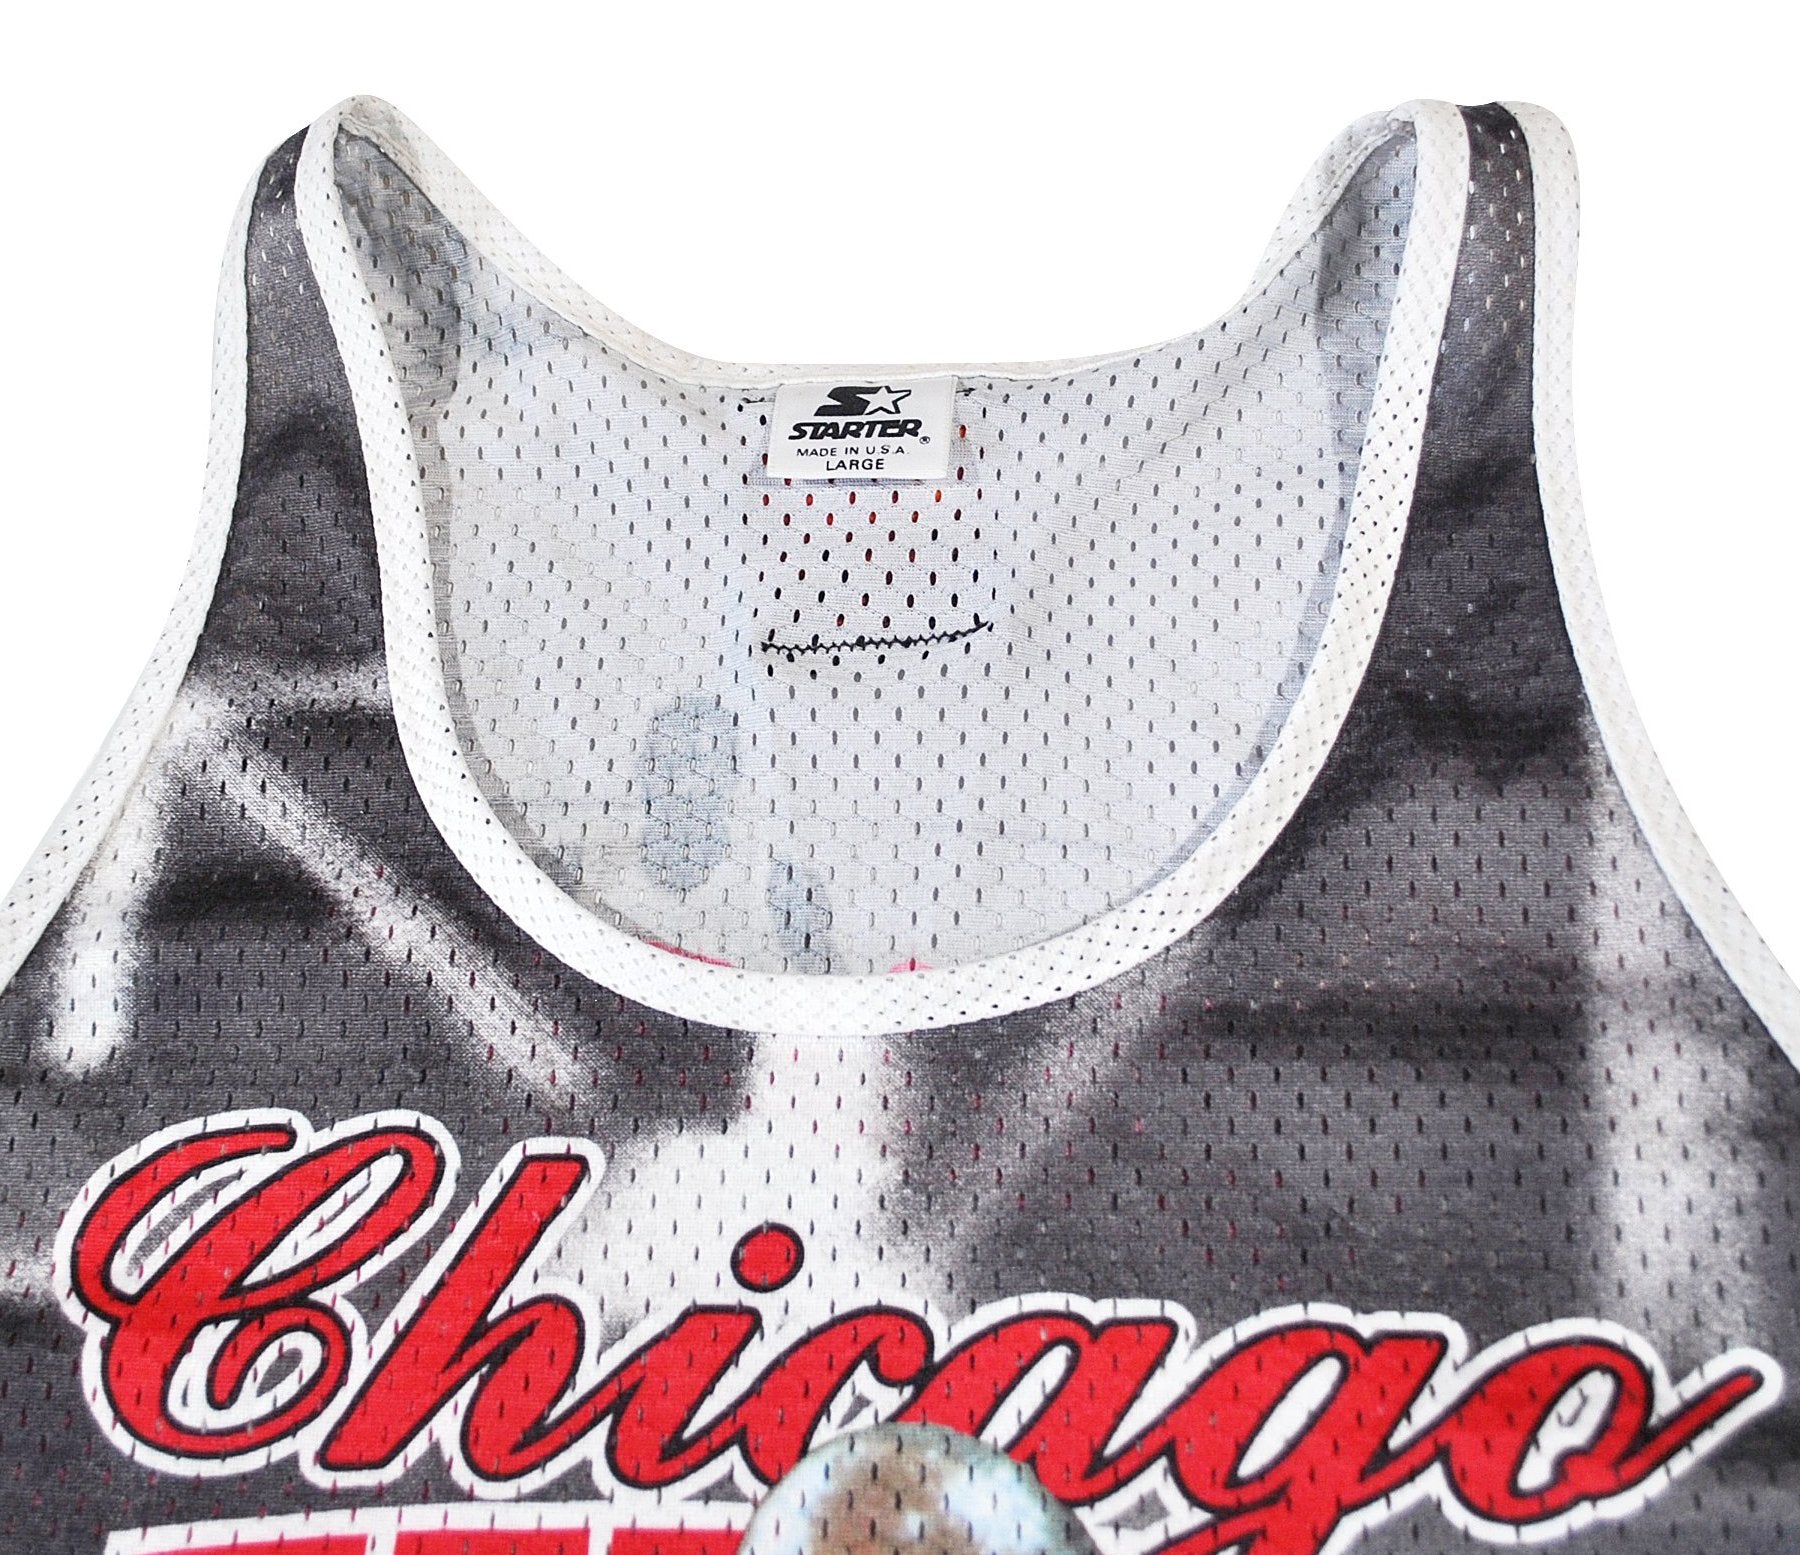 Vintage Nike NBA Chicago Bulls Michael Jordan Basketball Jersey